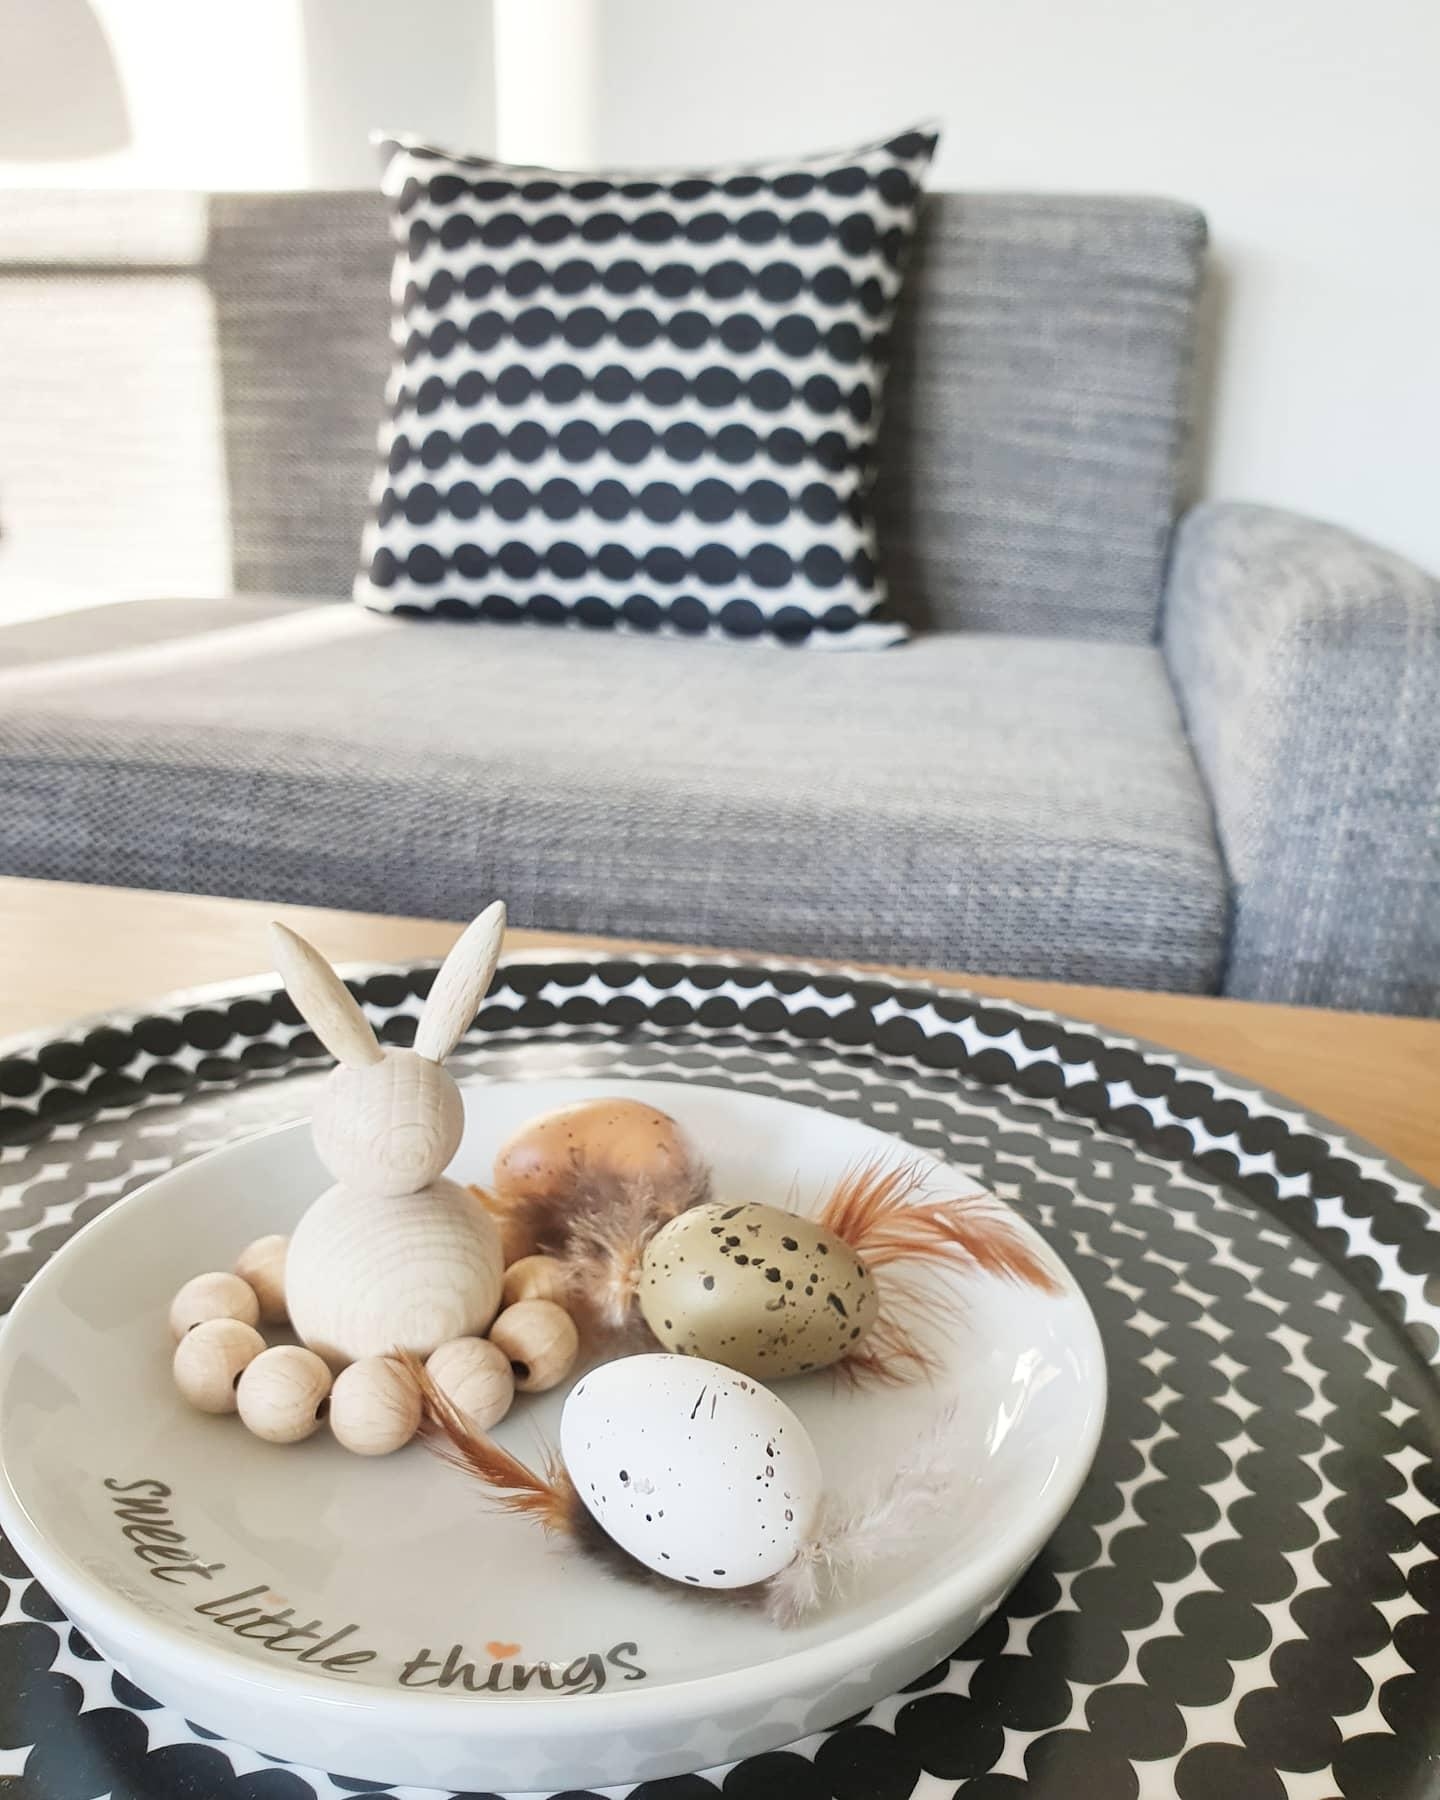 Ostern kann kommen 🖤
#ostern #deko #frühling #couchstyle 